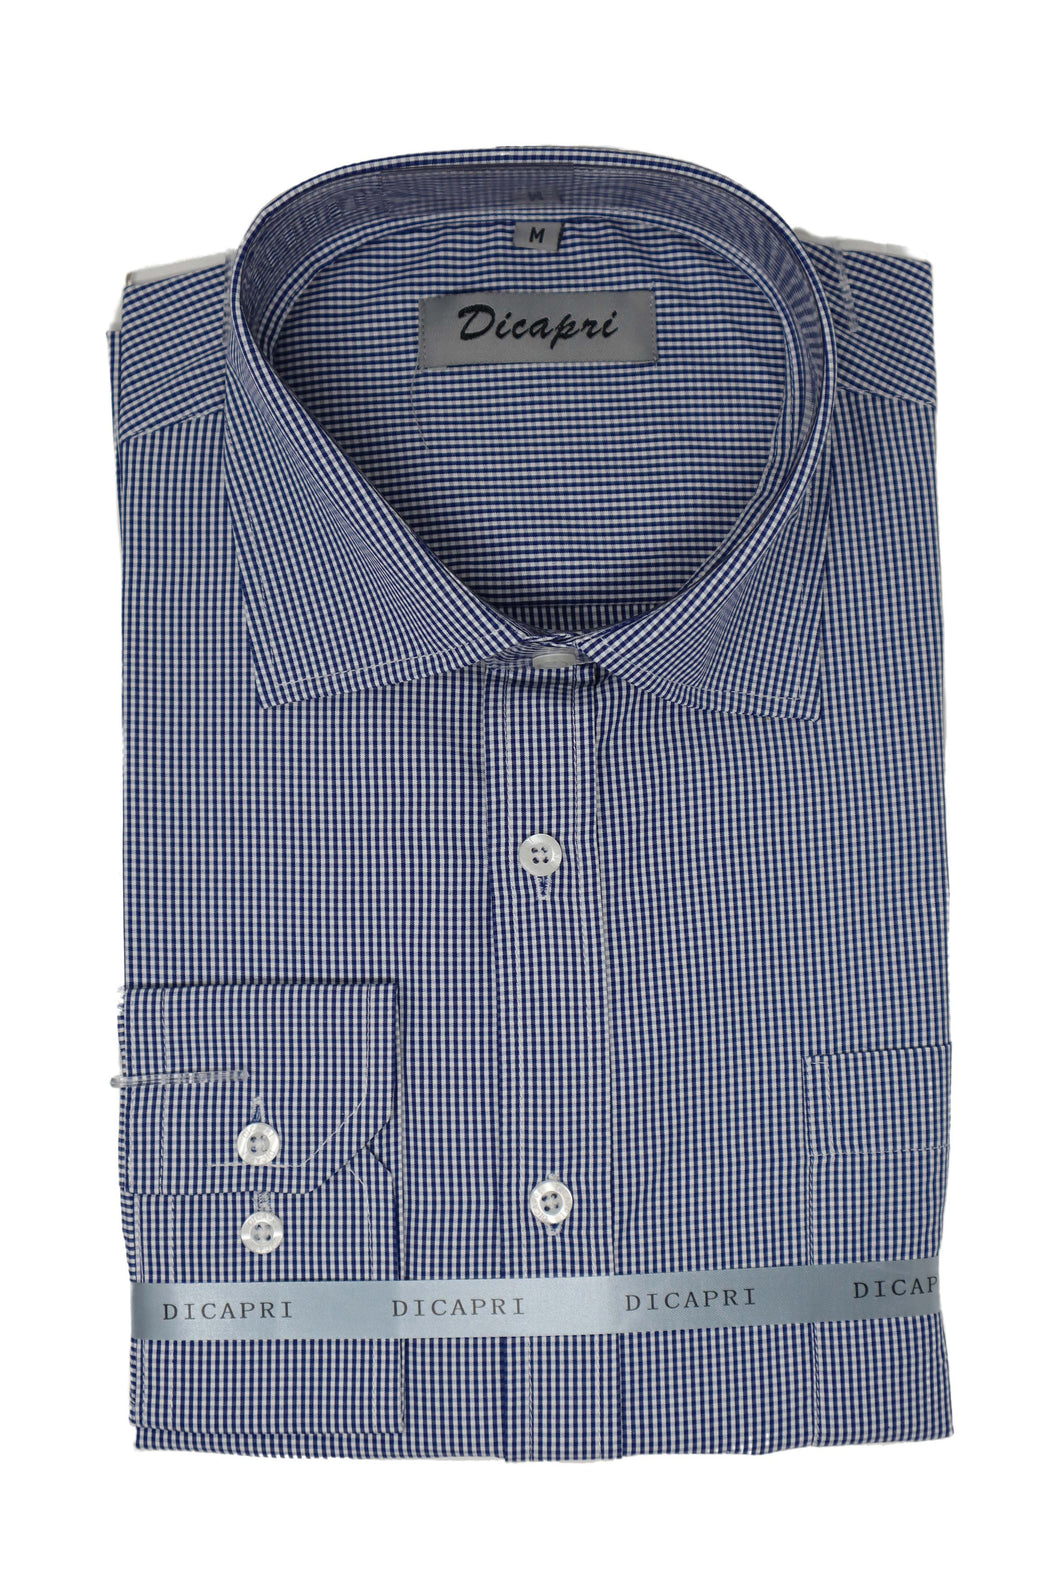 Men's | Dicapri | DS1601 | Dress Shirt | Blue/White